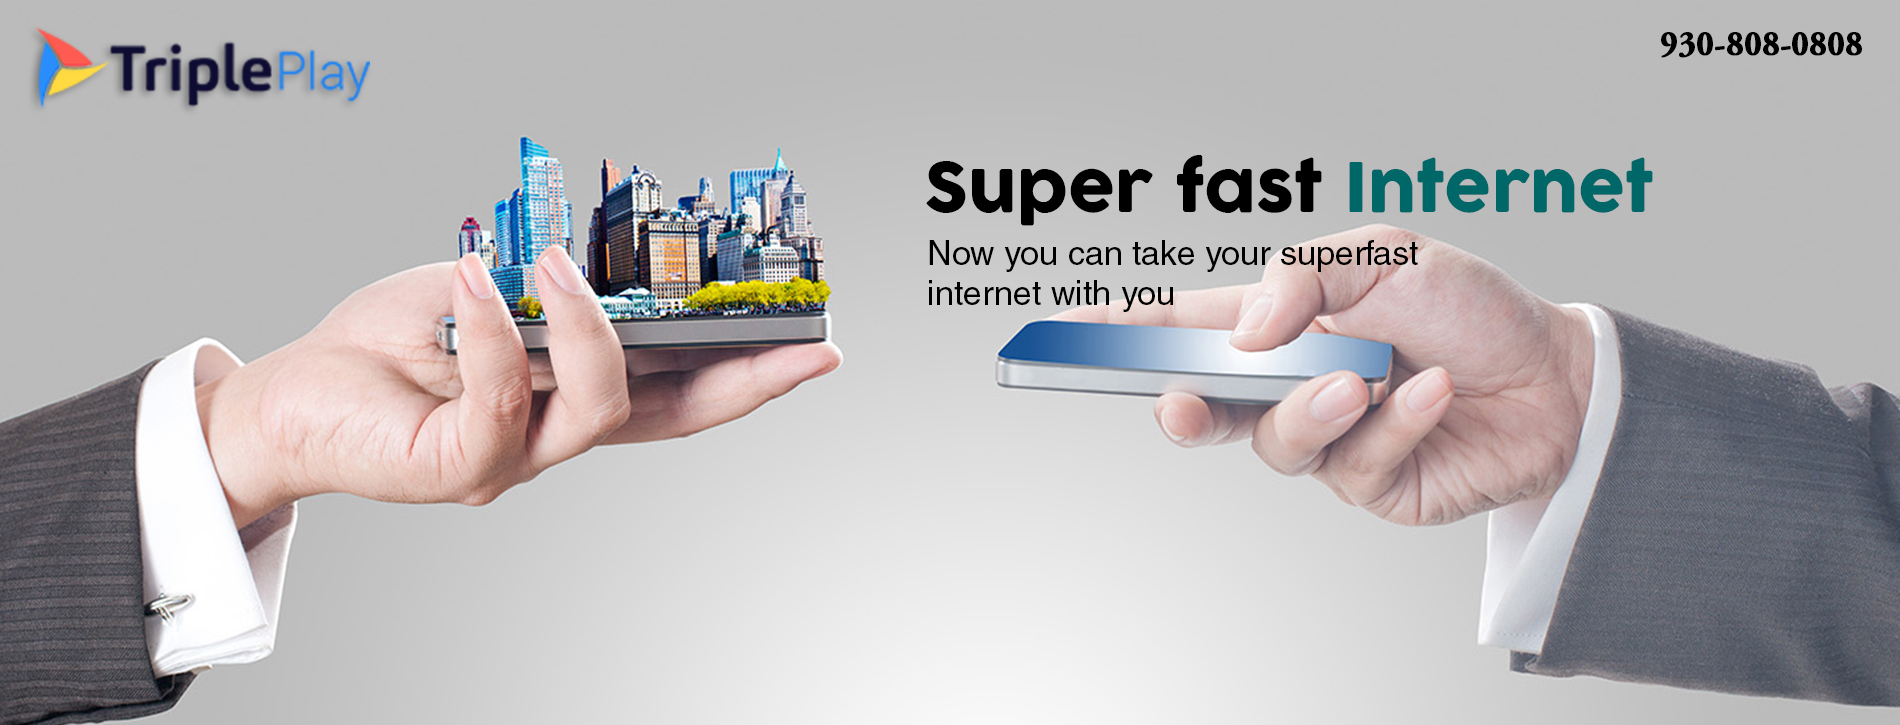 TriplePlay Broadband - Best Data Plans, Super fast Speed & Unparallel Service